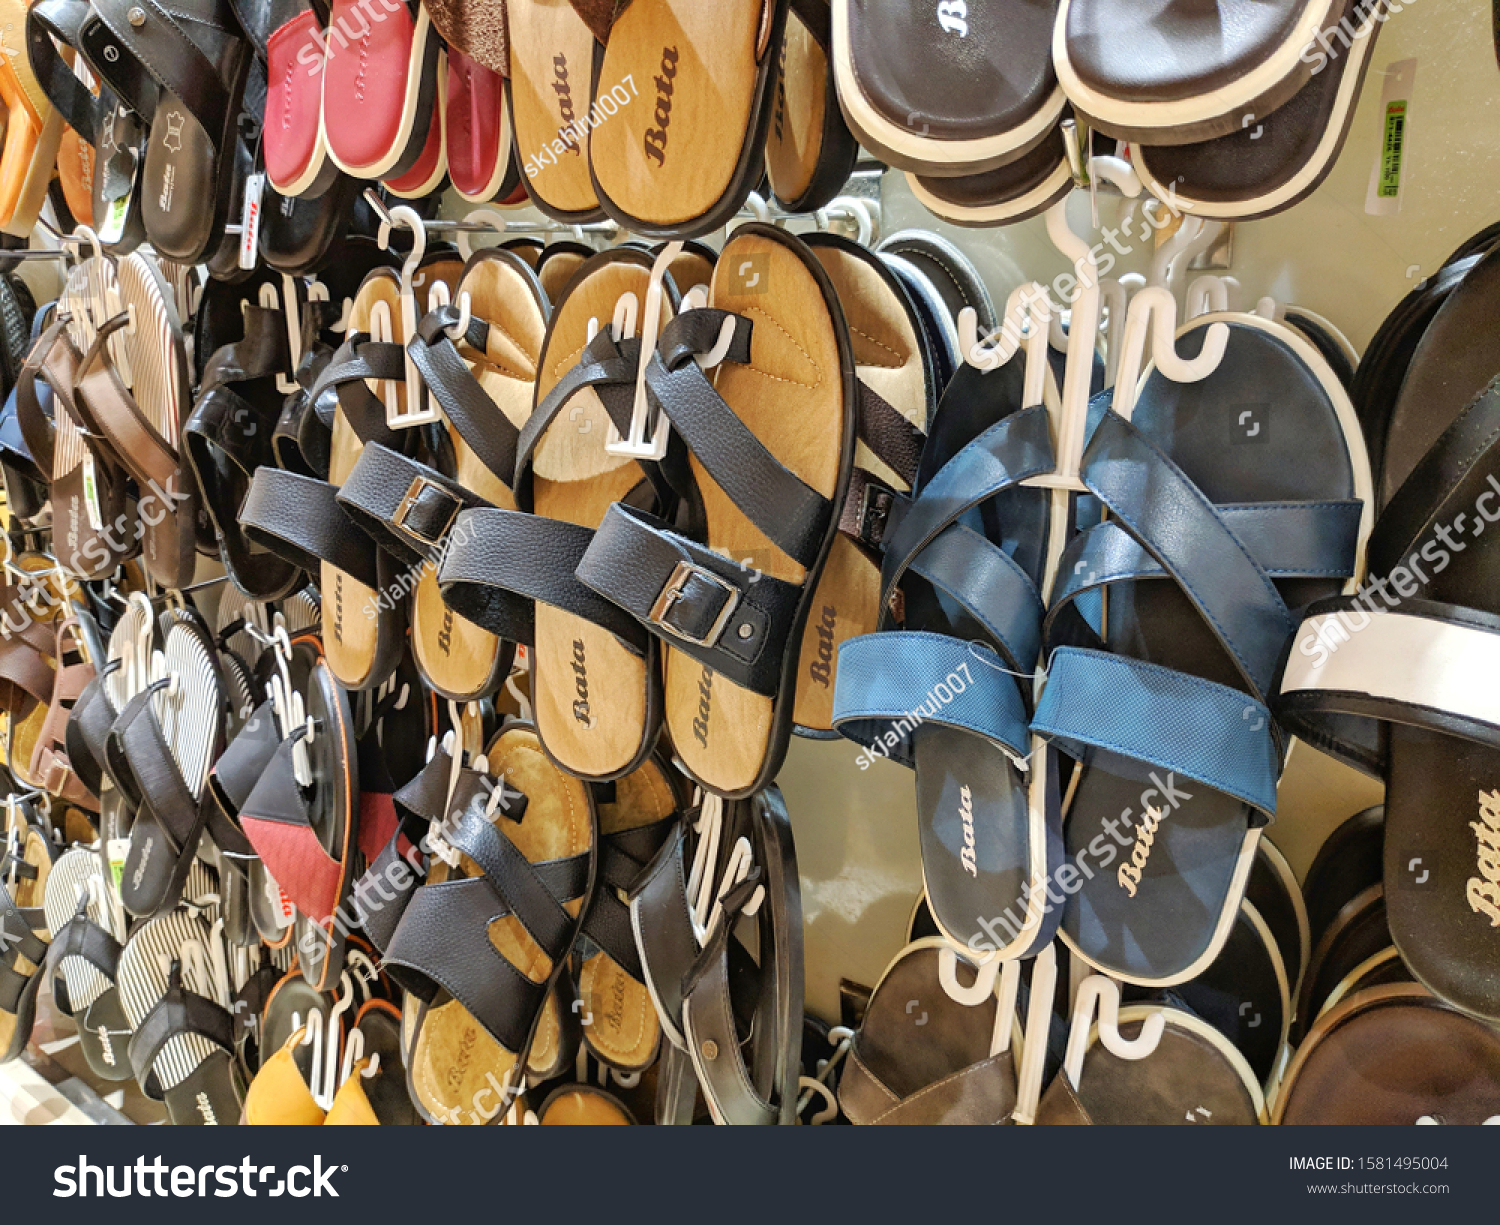 bata showroom sandals